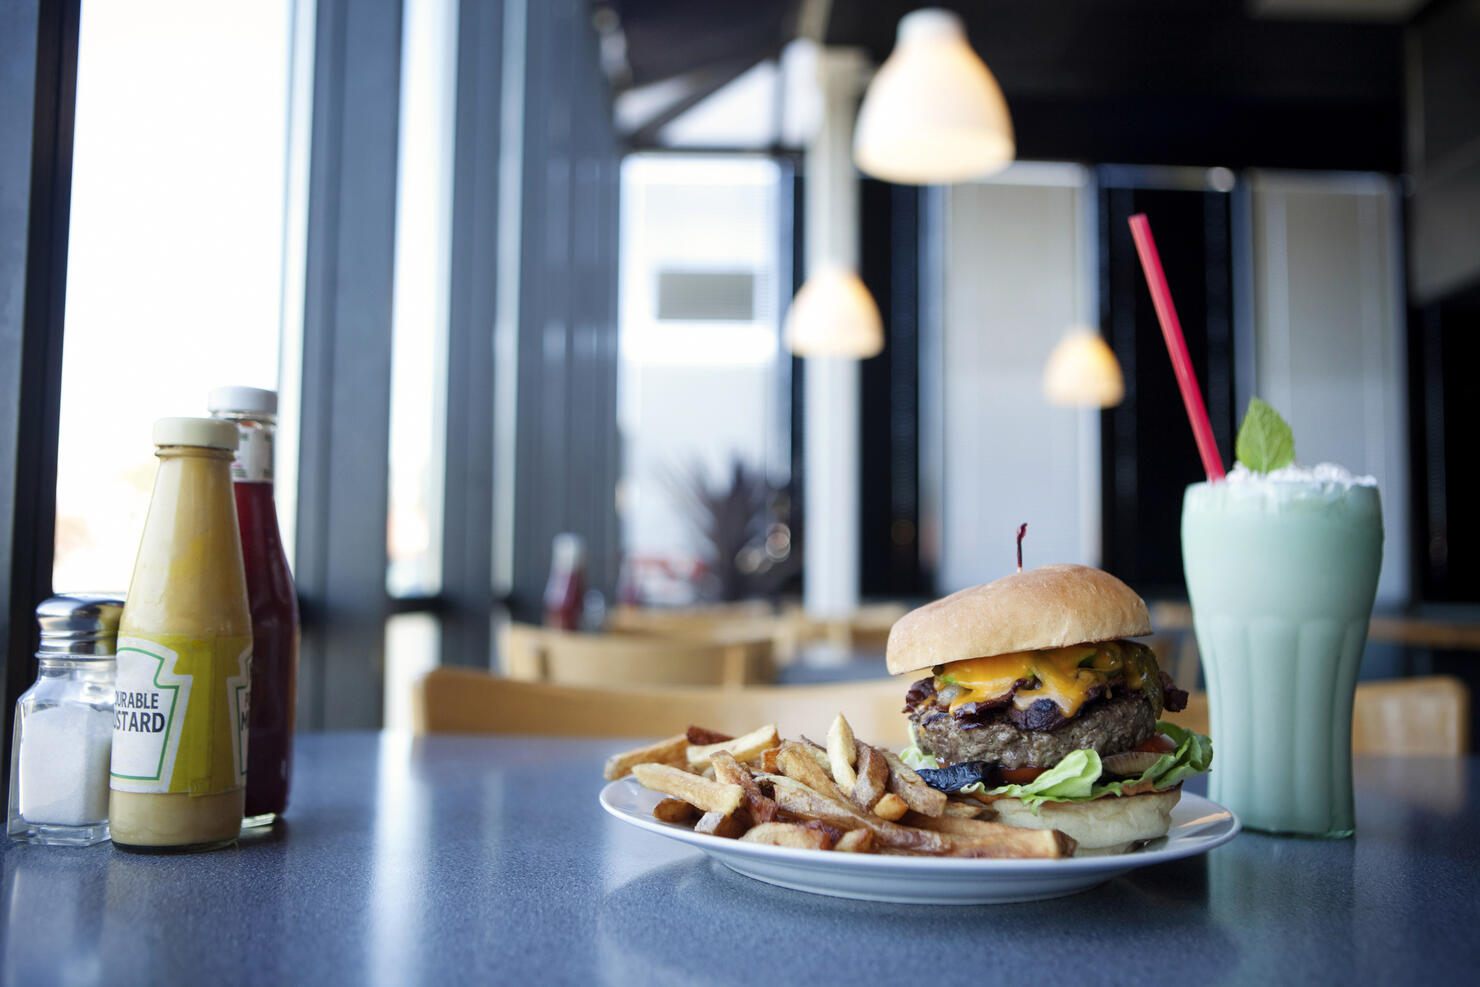 Cheeseburger, french fries and milkshake in diner